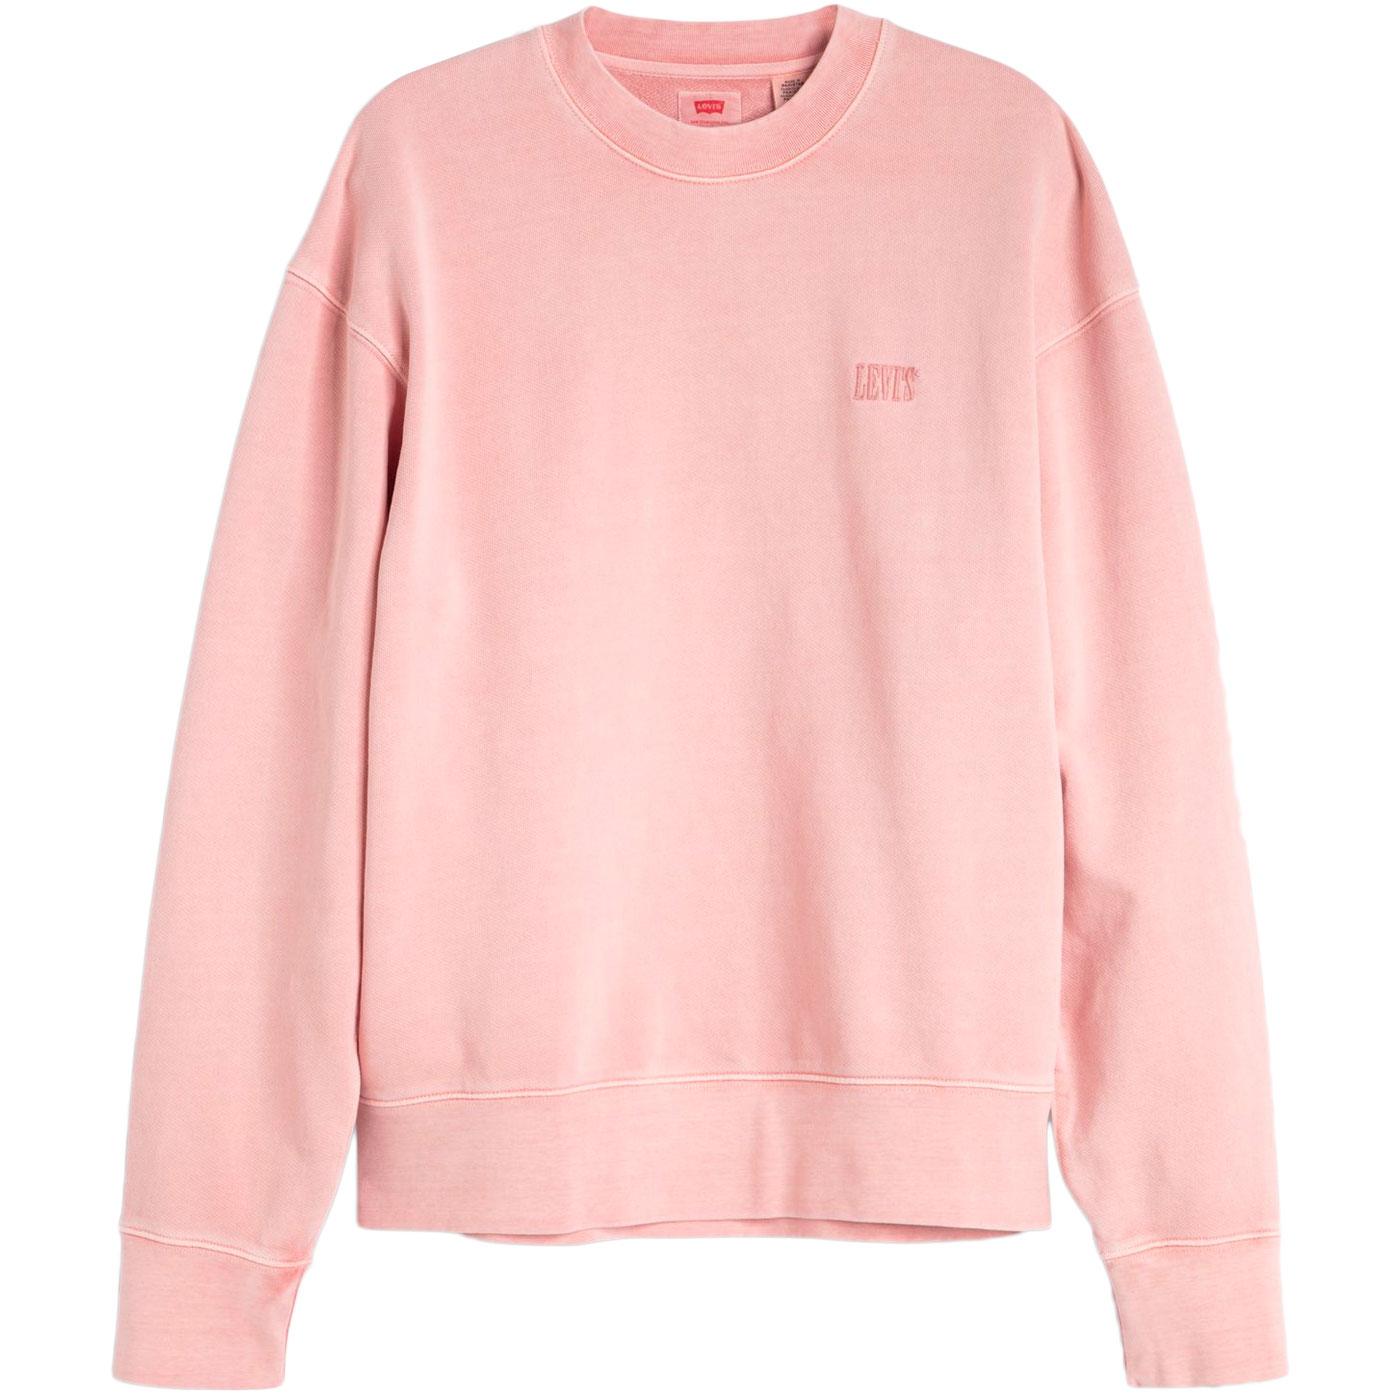 levi's pink sweatshirt